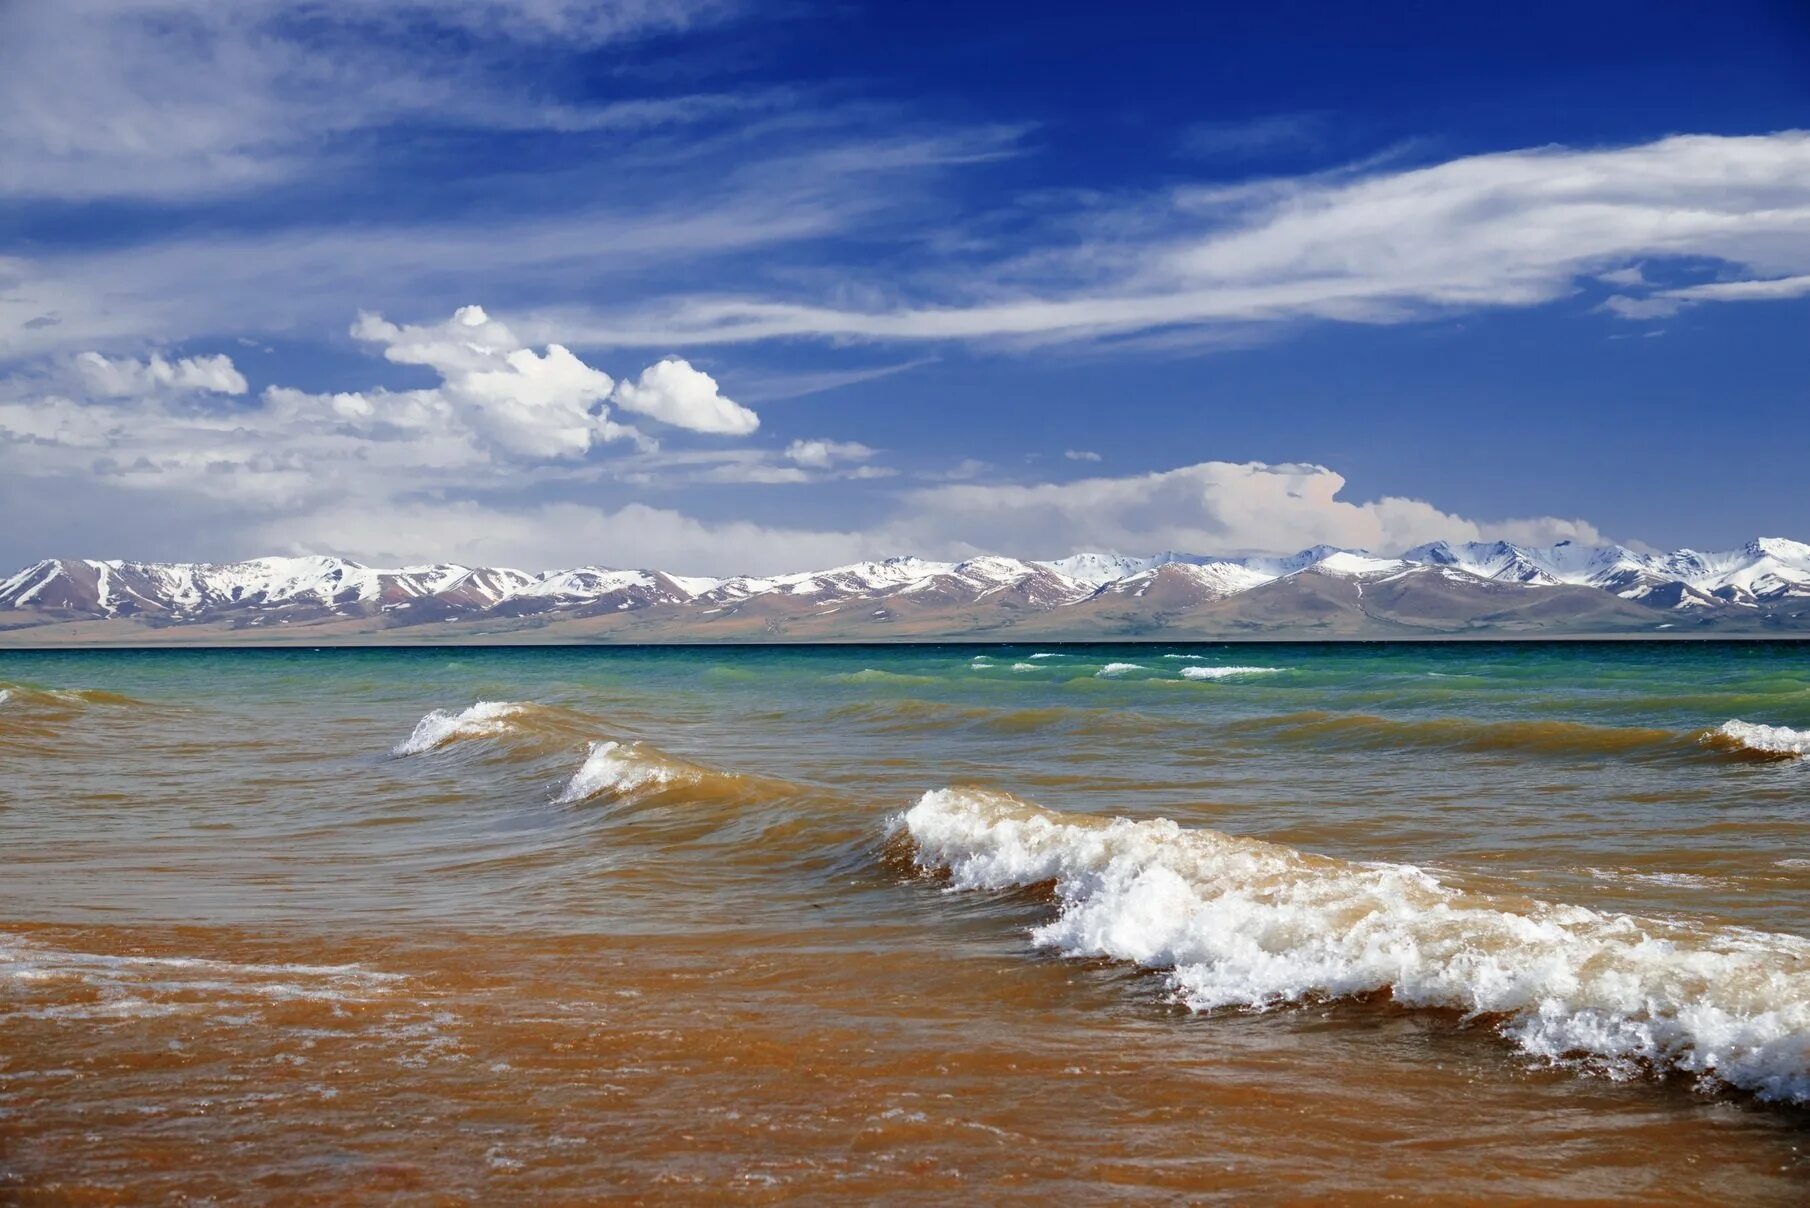 Берегу озера иссык куль. Озеро Иссык-Куль. Озеро Иссык-Куль Киргизия. Берег озера Иссык Куль. Иссык-Куль зимой.